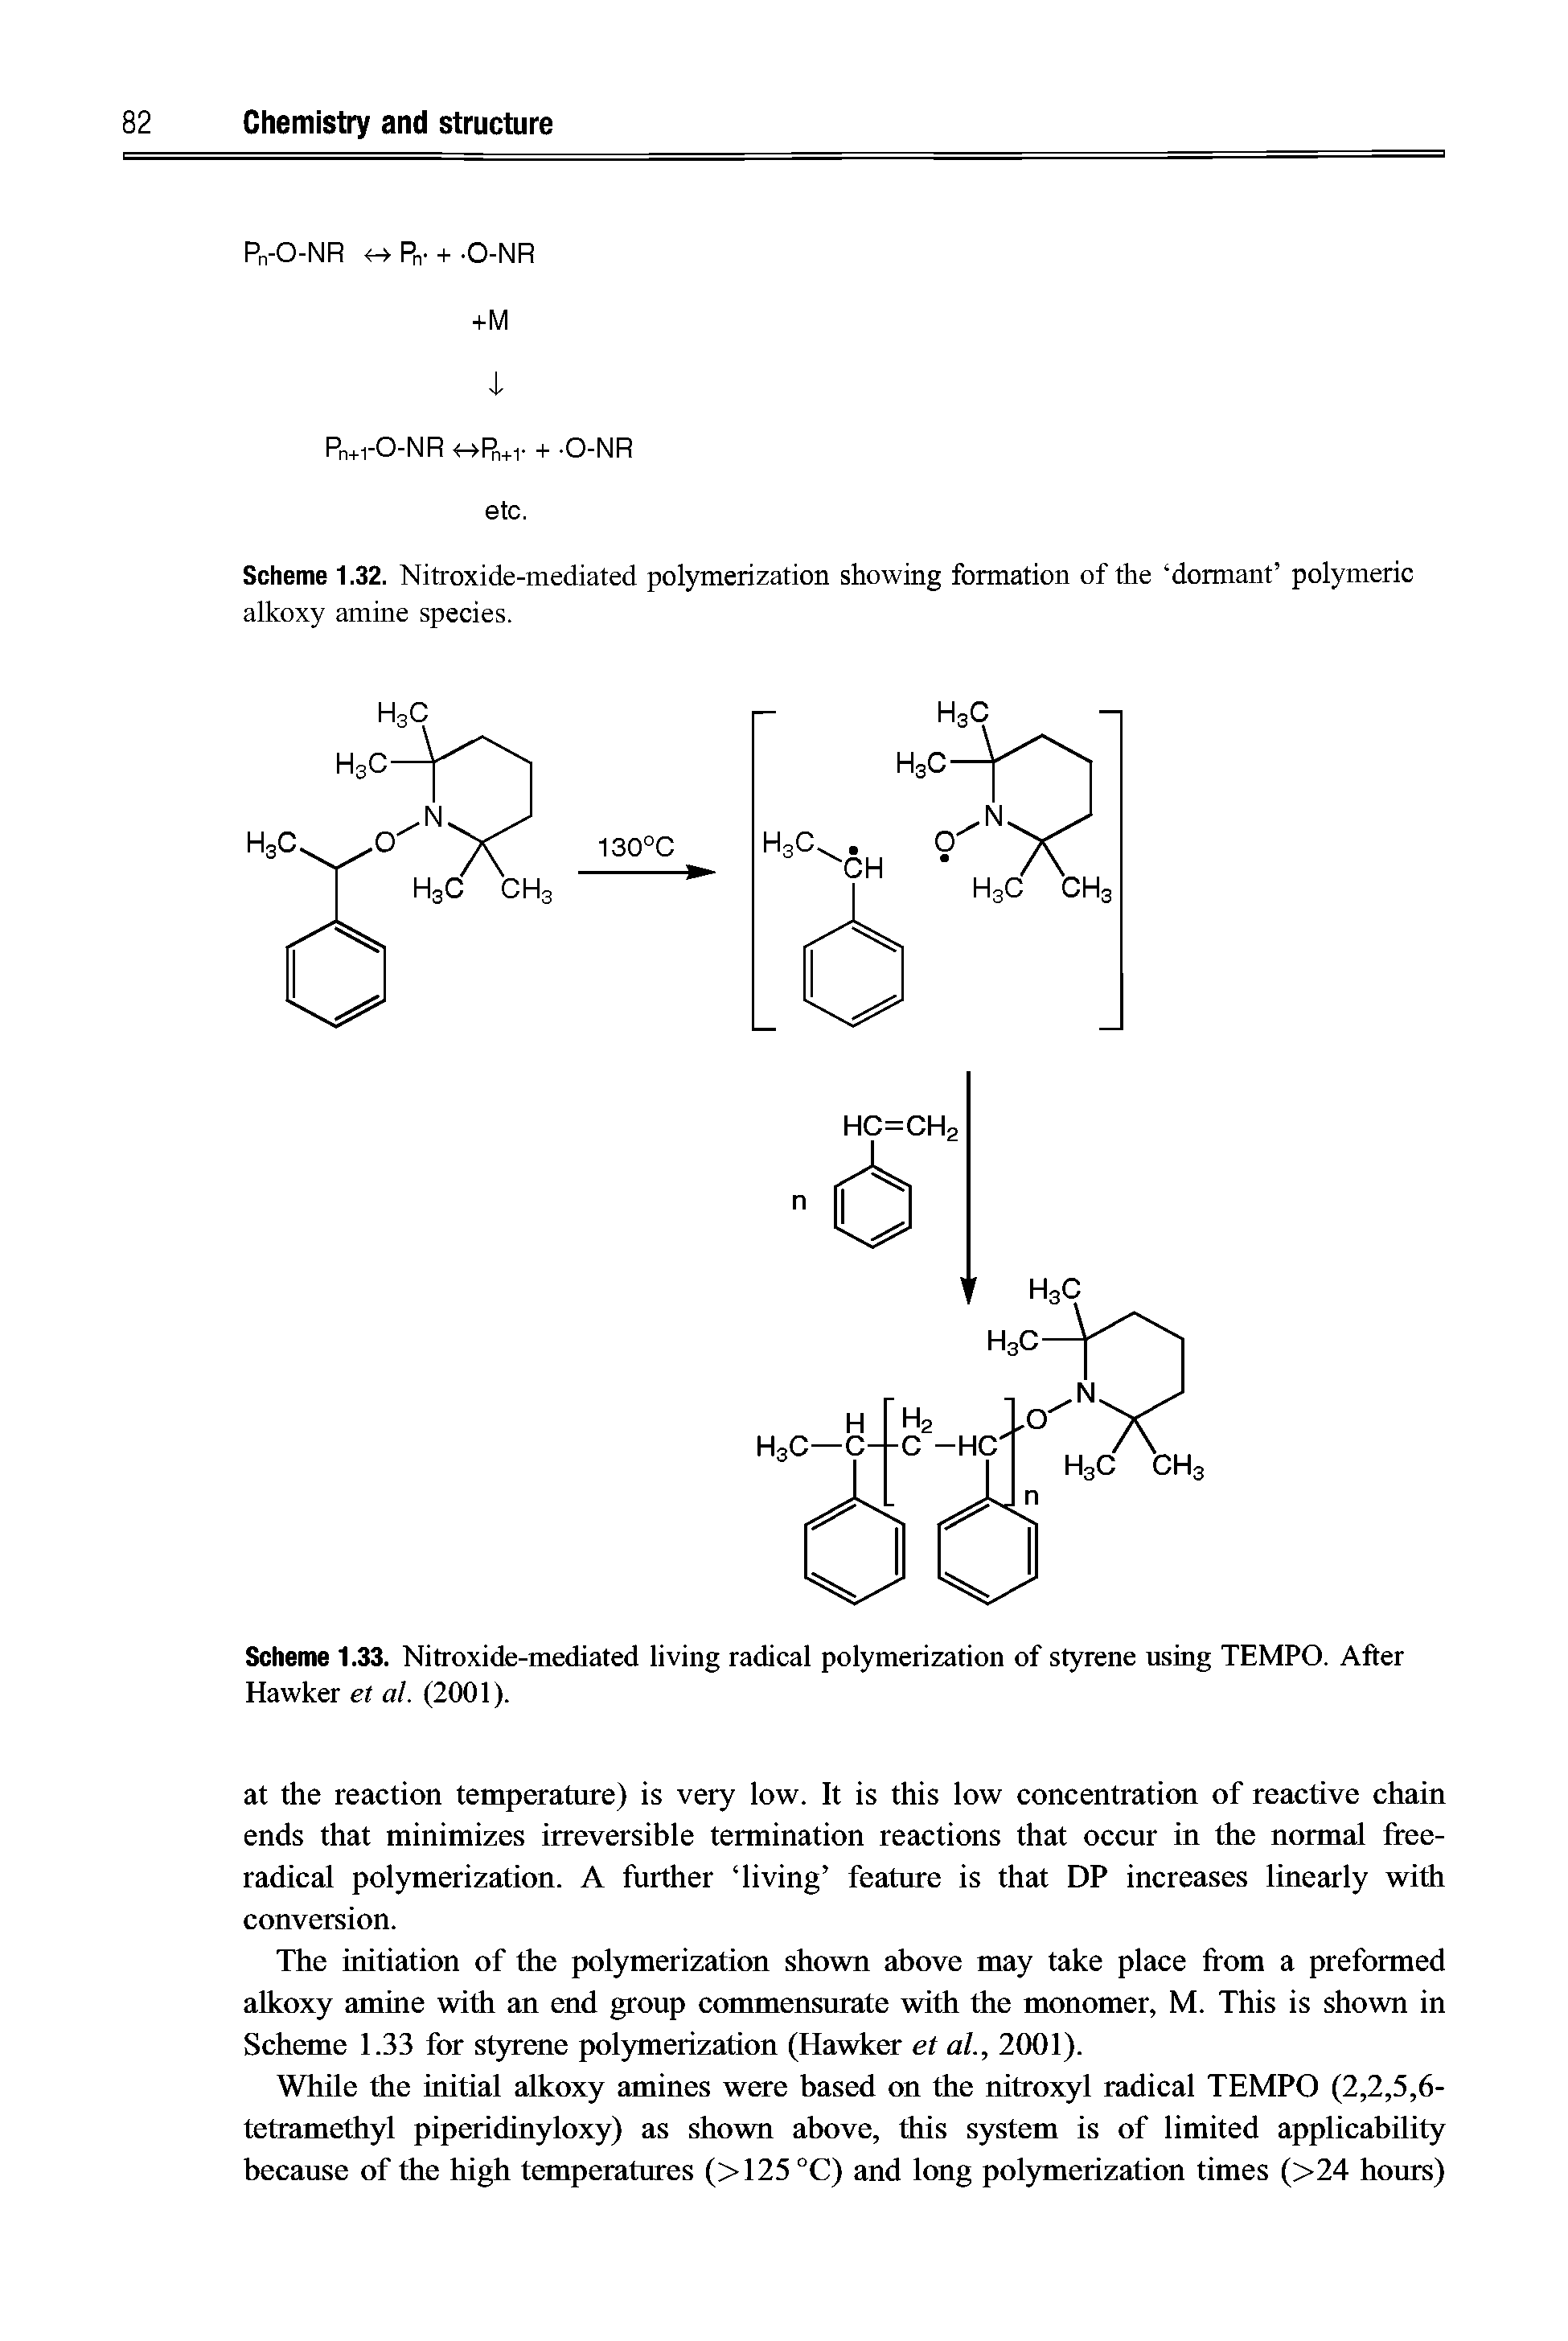 Scheme 1.33. Nitroxide-mediated living radical polymerization of styrene using TEMPO. After Hawker et al. (2001).